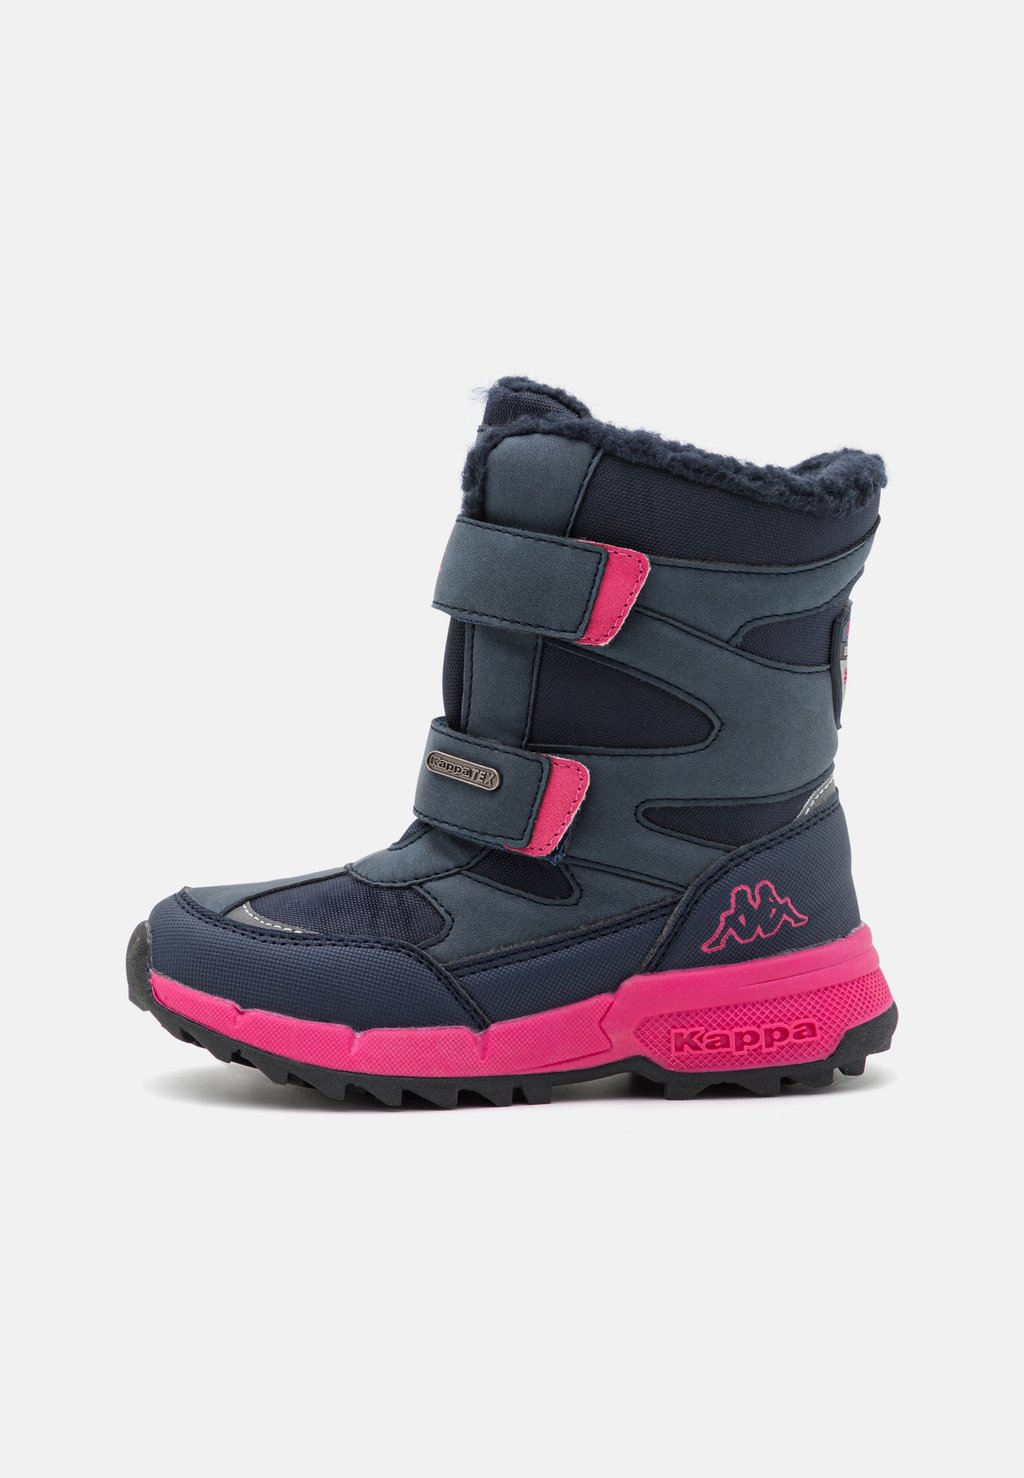 Снегоступы/зимние ботинки Kappa, цвет navy/pink зимние ботинки kappa